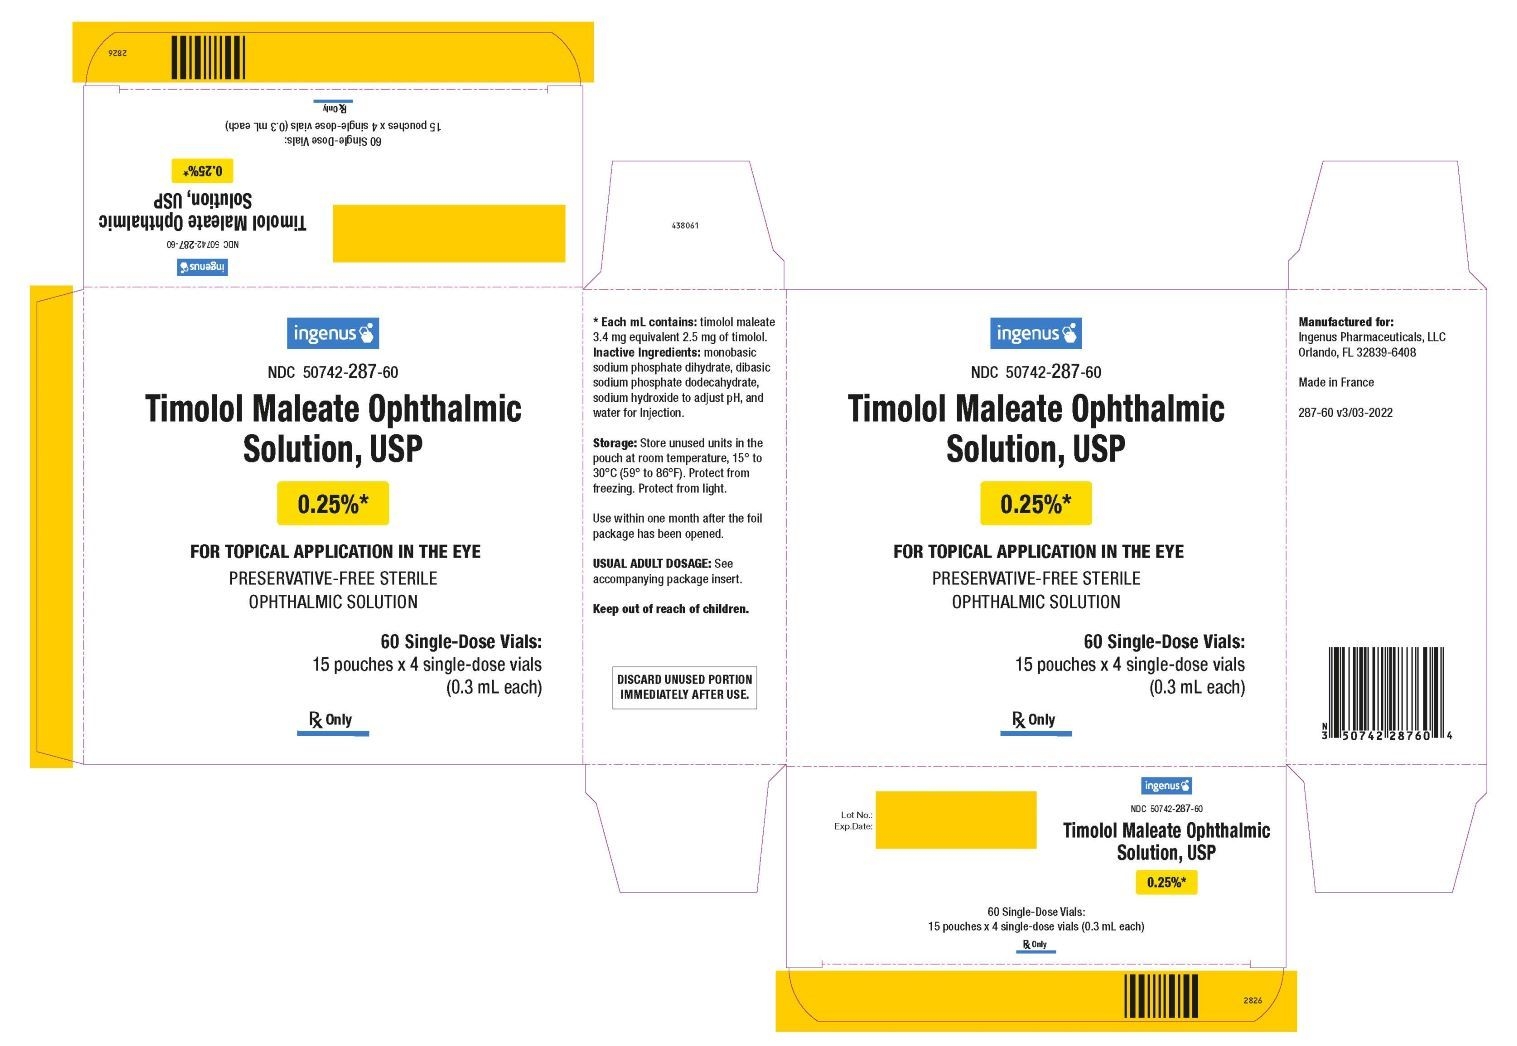 Timolol Maleate Ophthalmic Solution USP, 0.25% - Carton Label